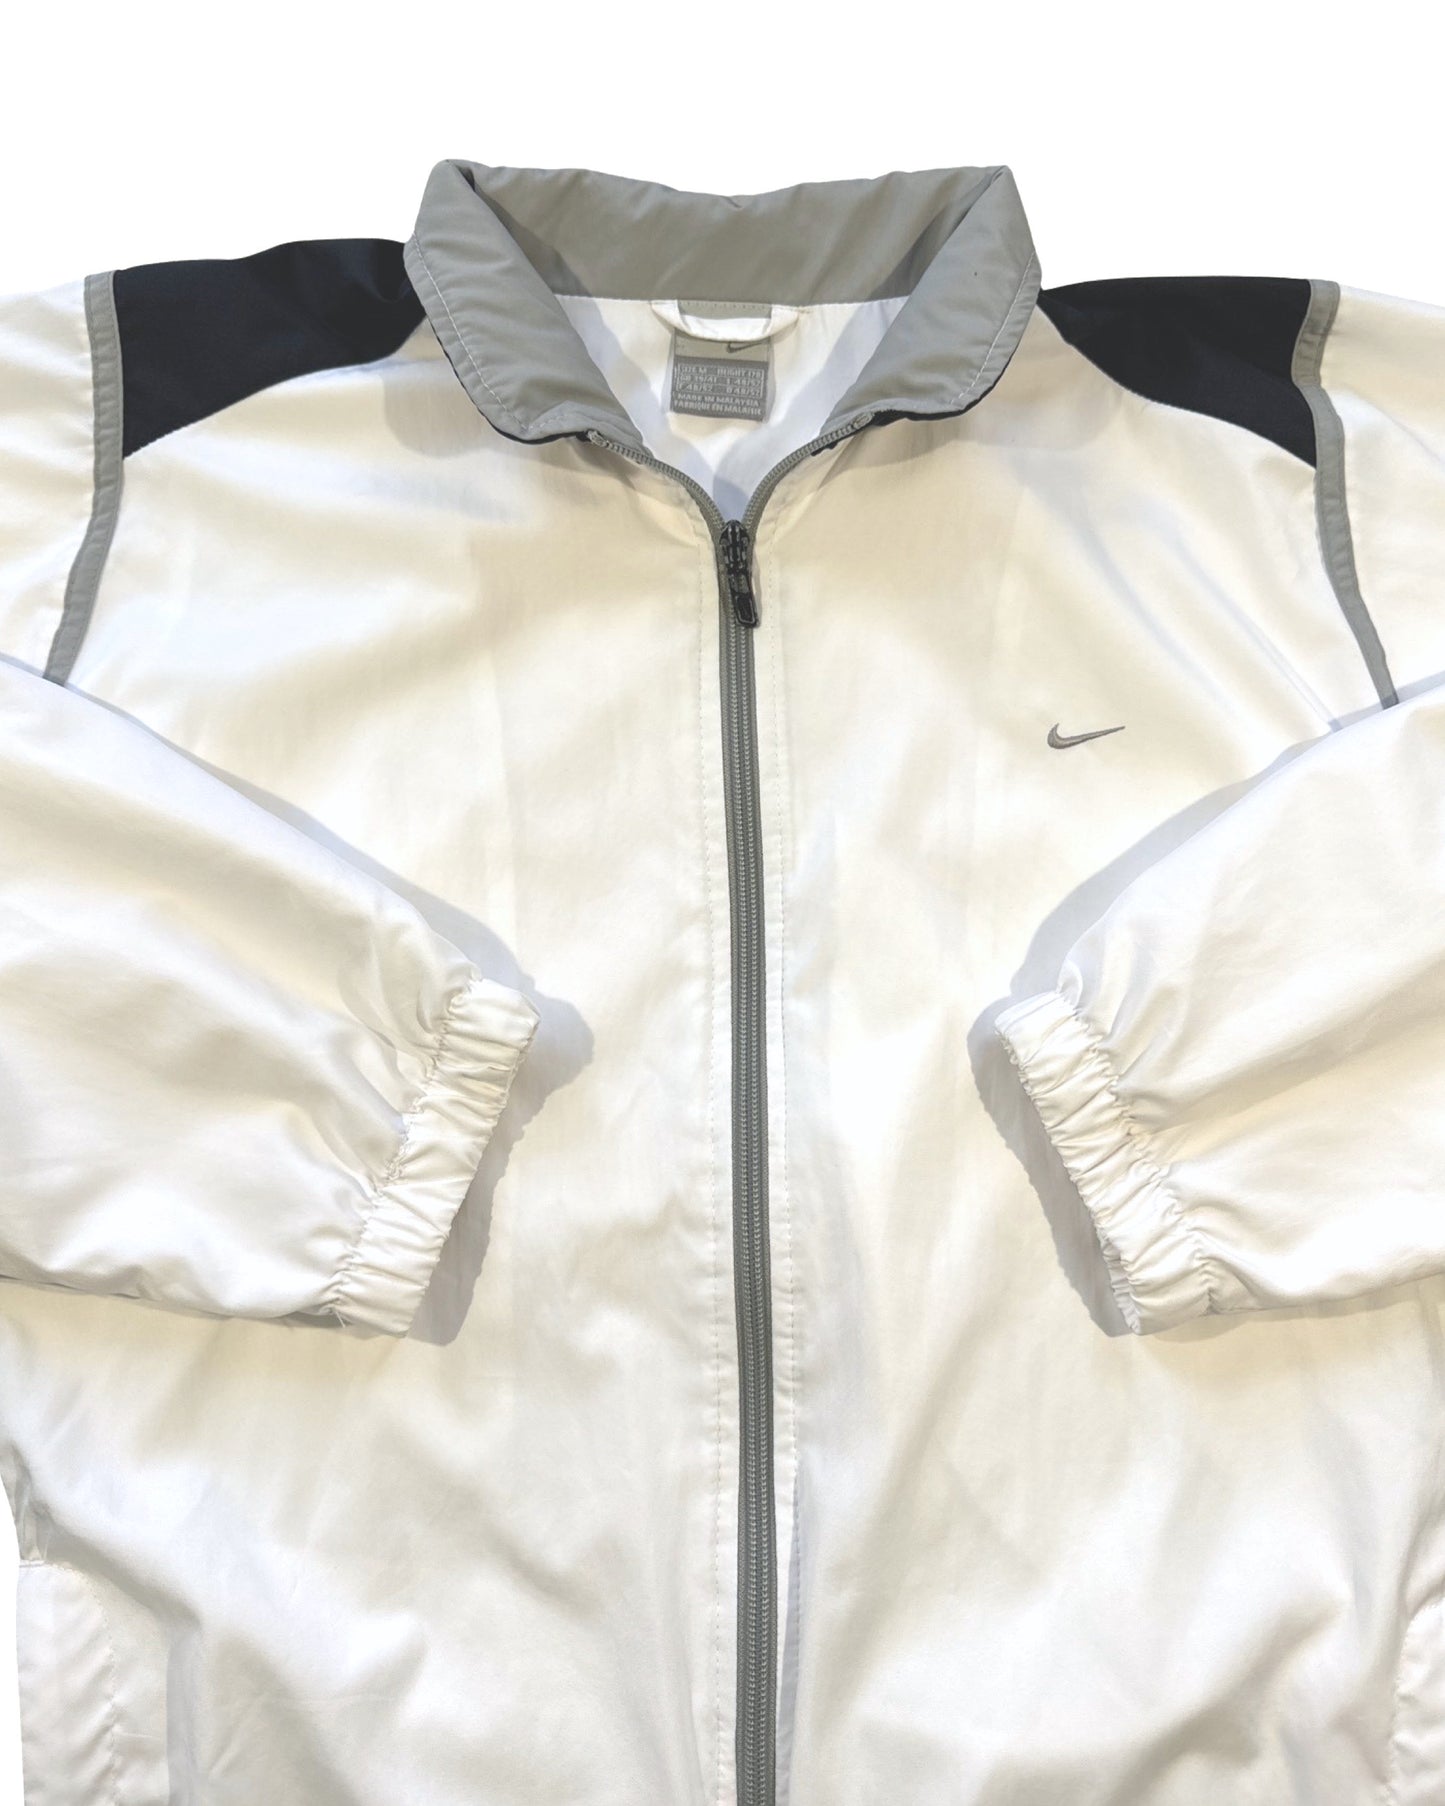 Vintage Nike Spring Jacket - M